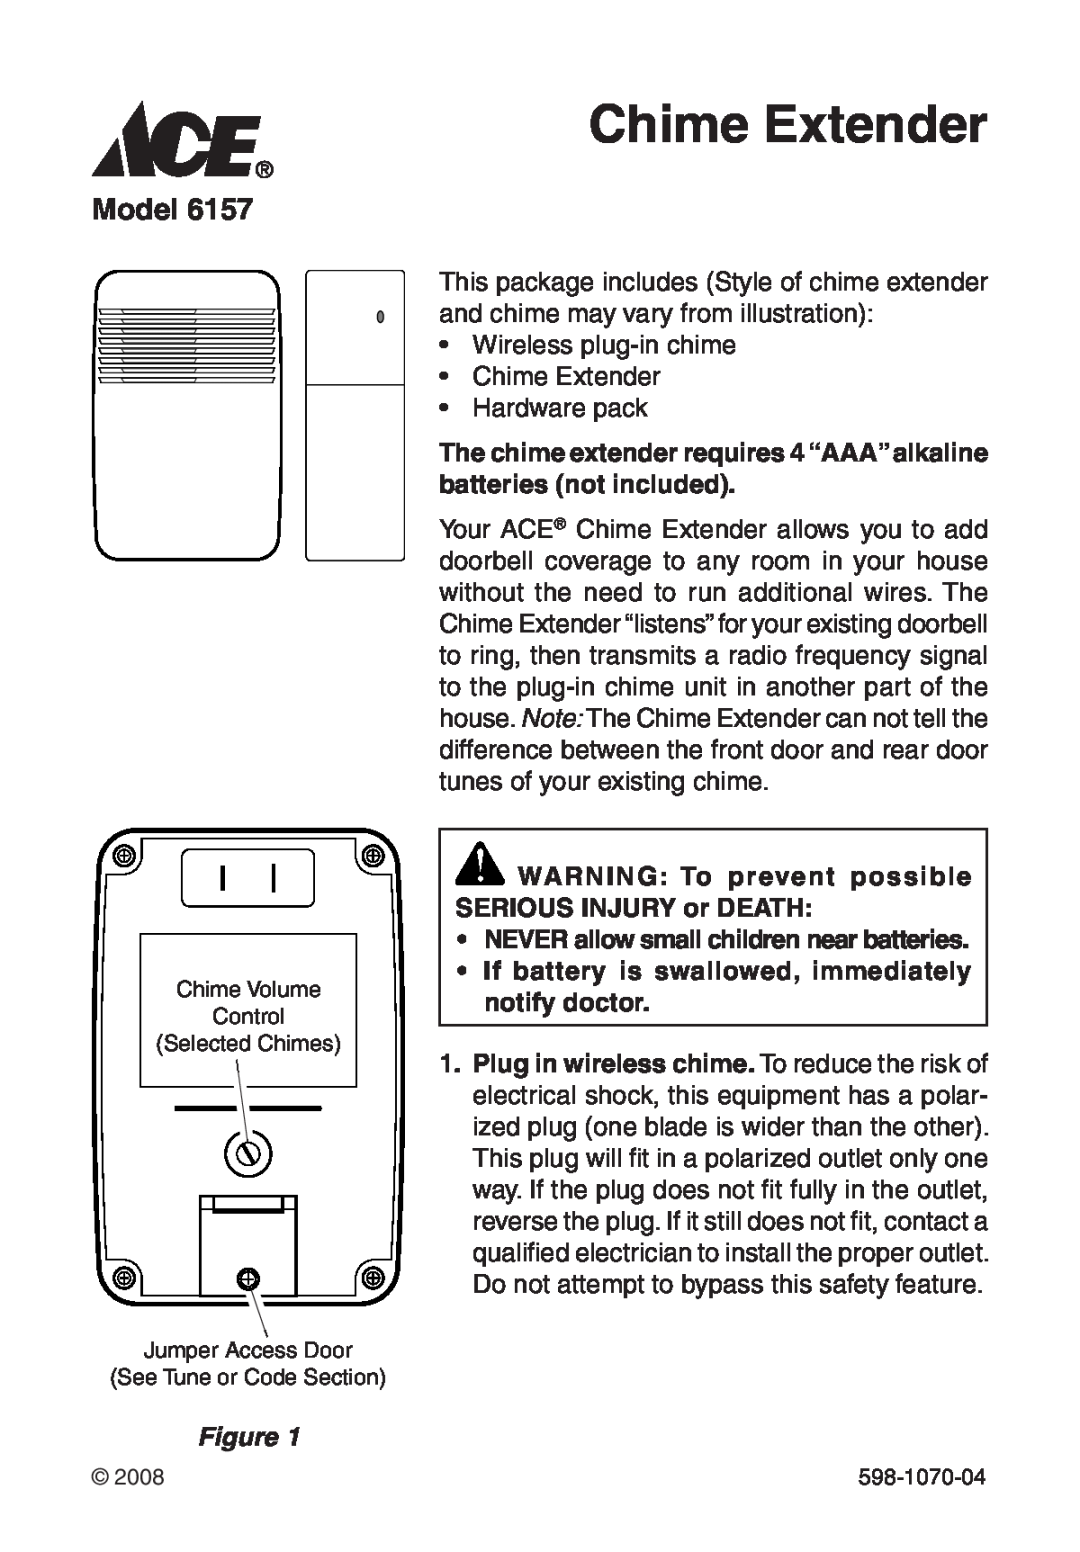 Heath Zenith 6157 manual Chime Extender, Model, NEVER allow small children near batteries 